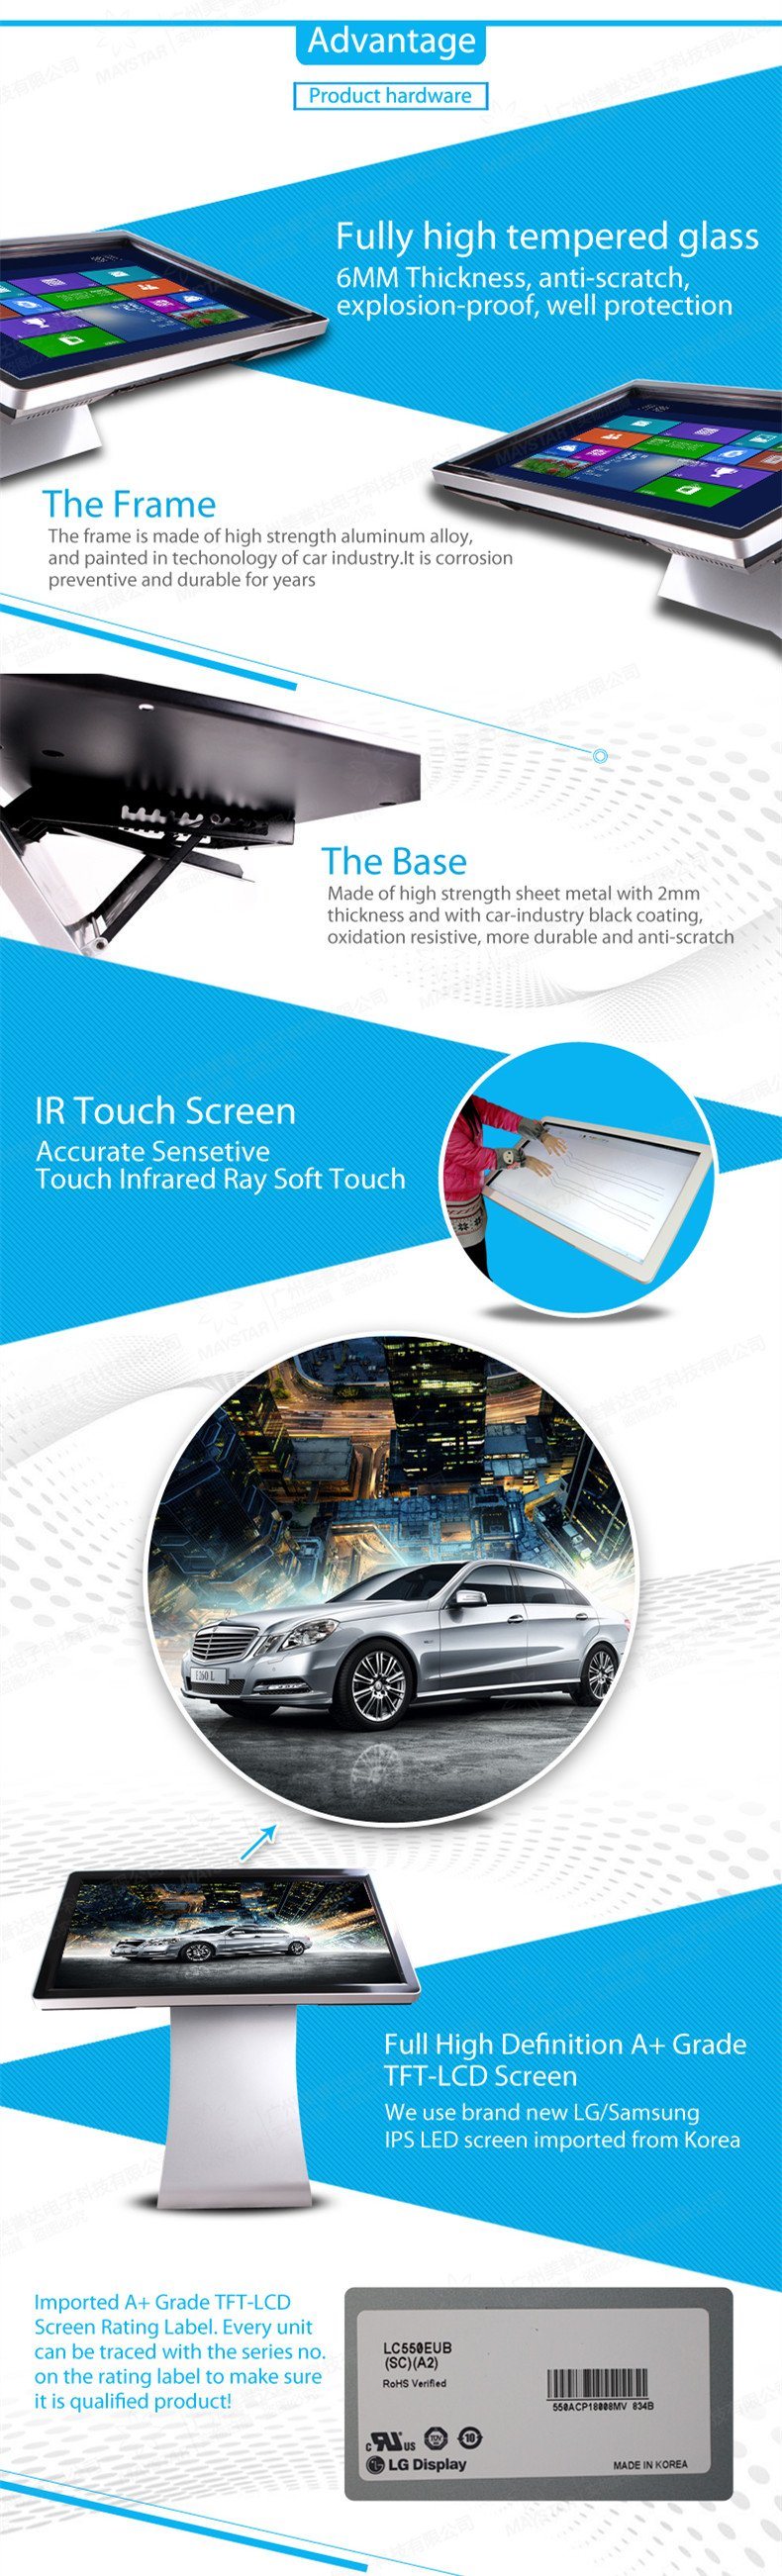 42inch 3G WiFi Network TFT Touch Screen Advertising Kiosk